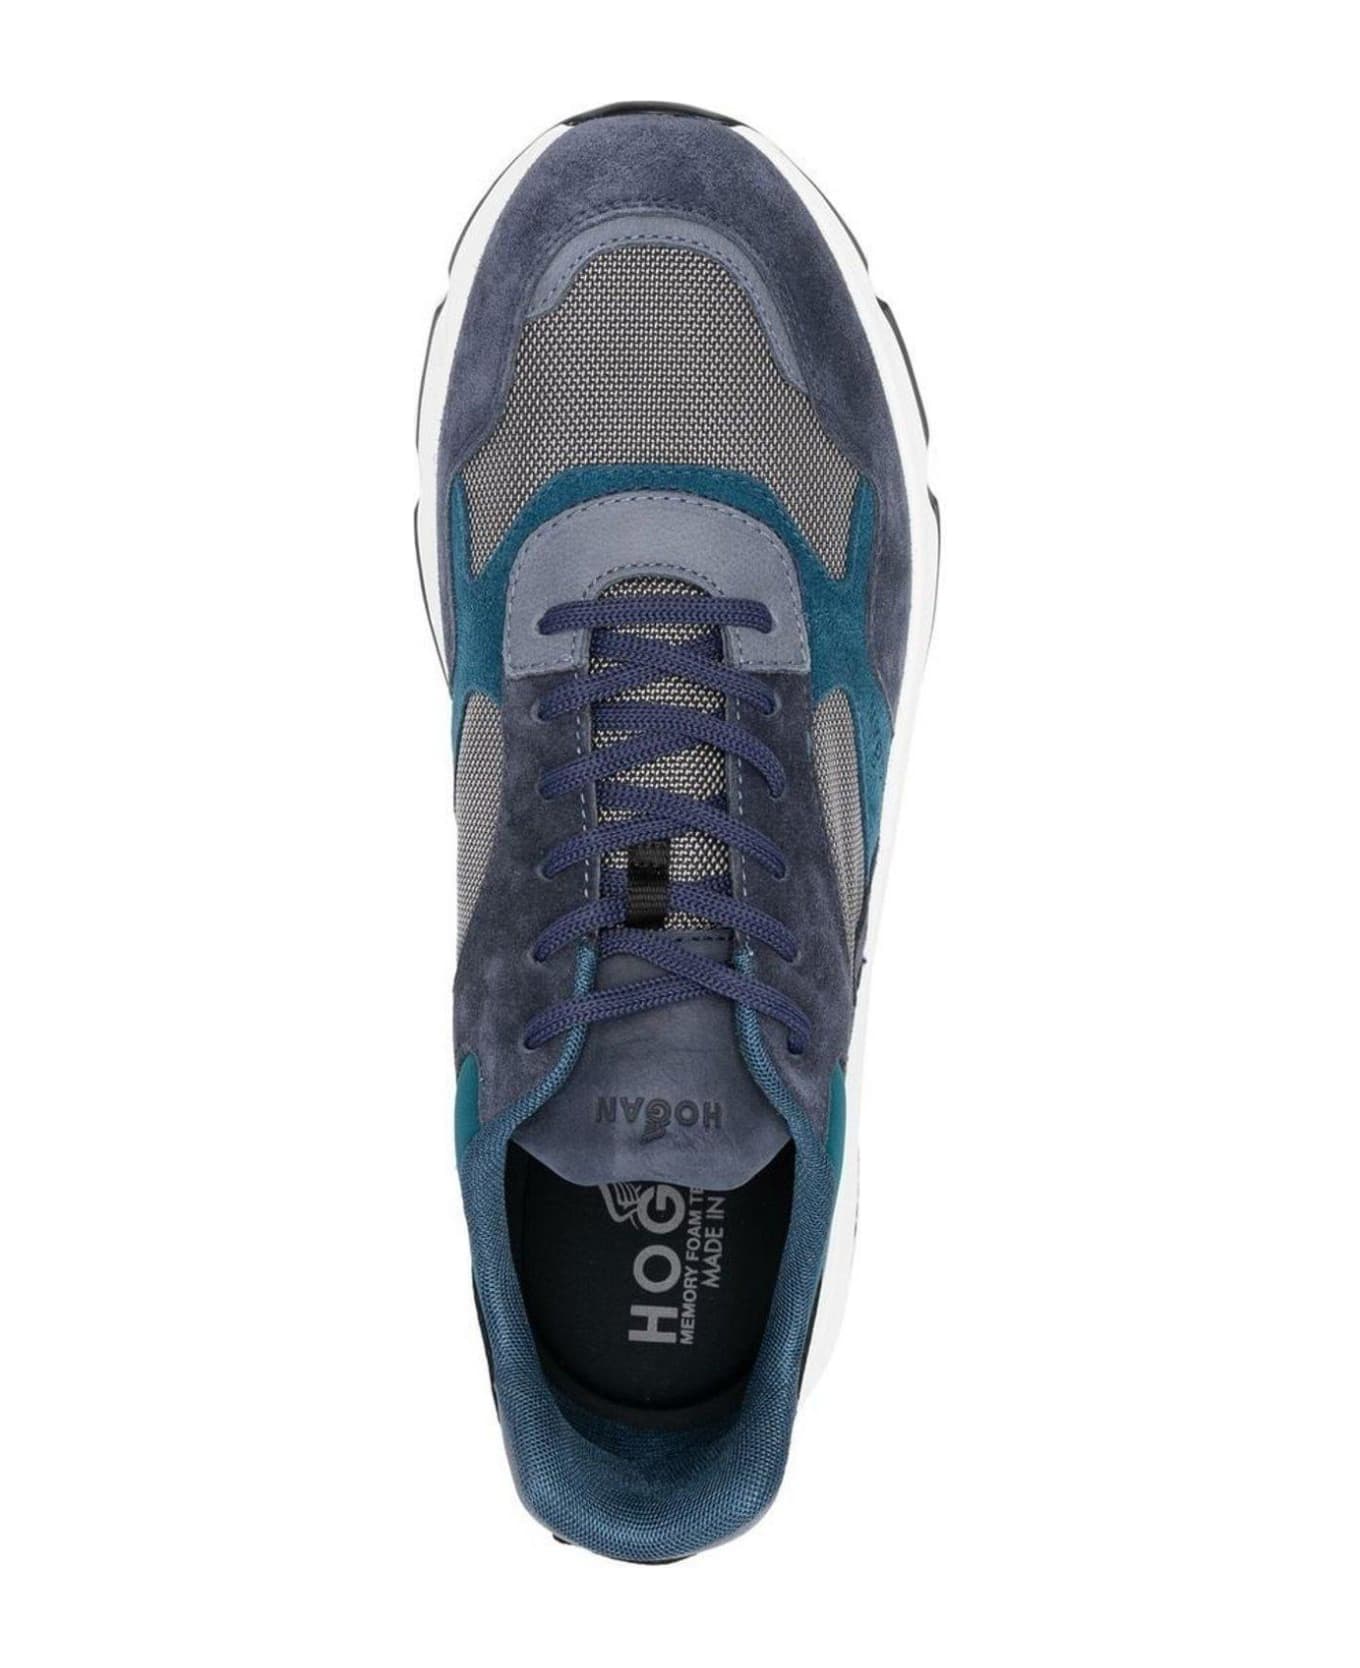 Hogan Panelled Lace-up Sneakers - Blu/grigio スニーカー